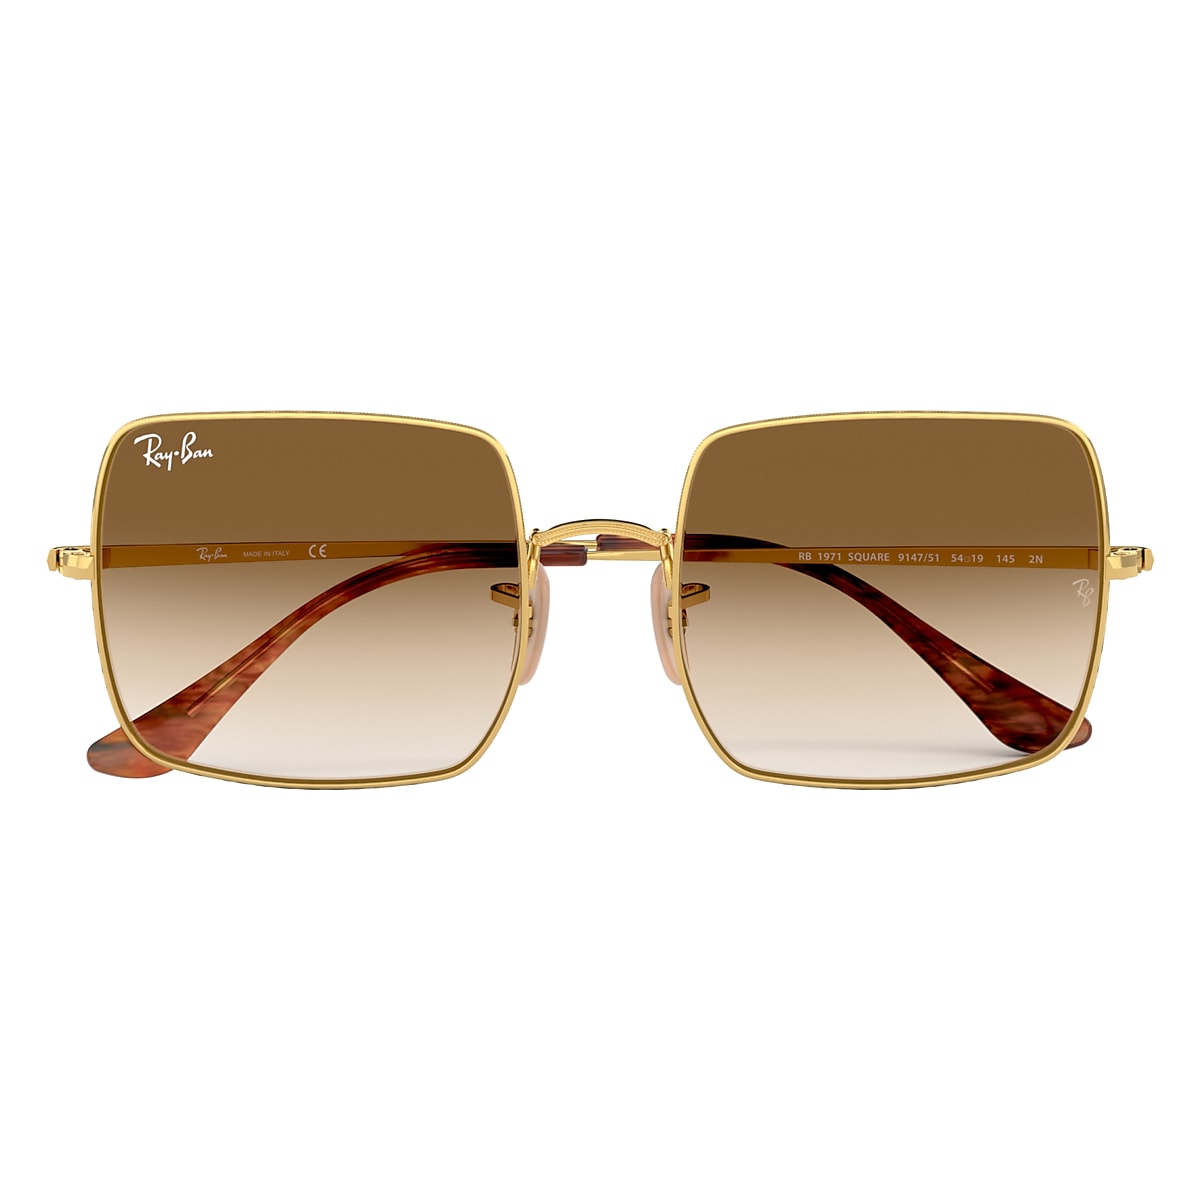 Square 1971 Classic Sunglasses in Dourado and Castanho-claro | Ray-Ban®